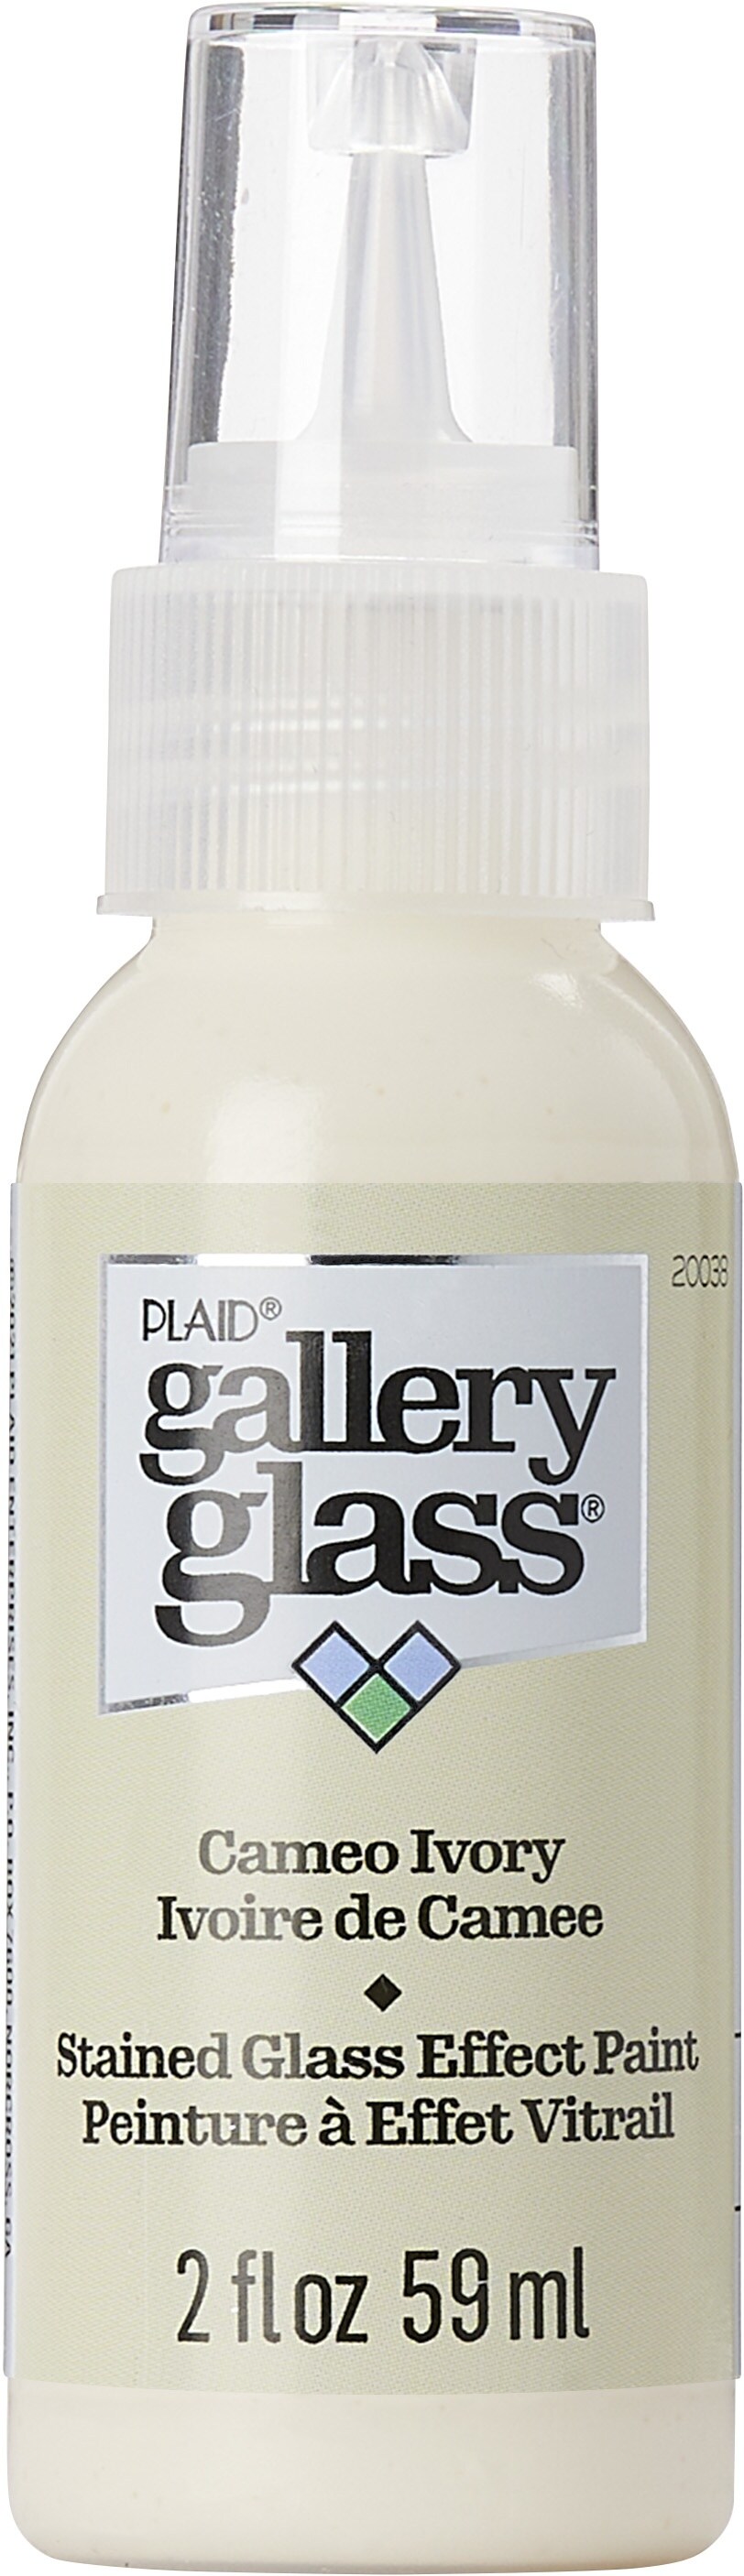 FolkArt Gallery Glass Paint 2oz